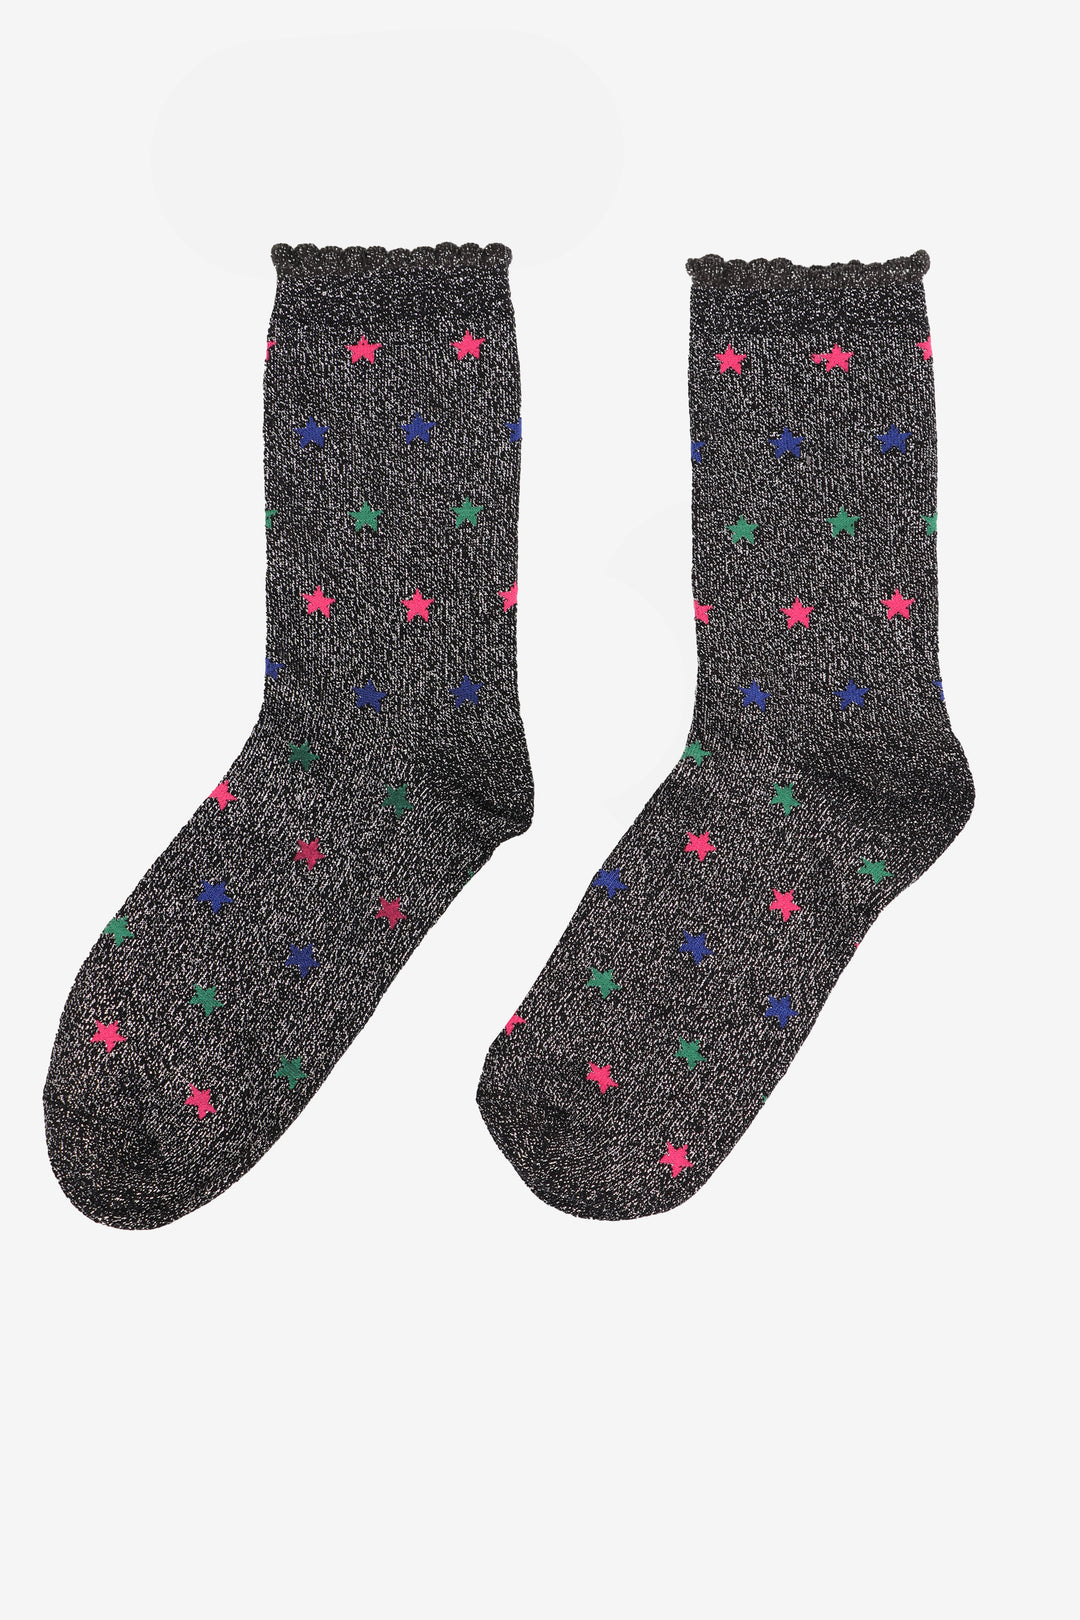 Black Multi Star Print Glitter Socks with Scalloped Cuffs